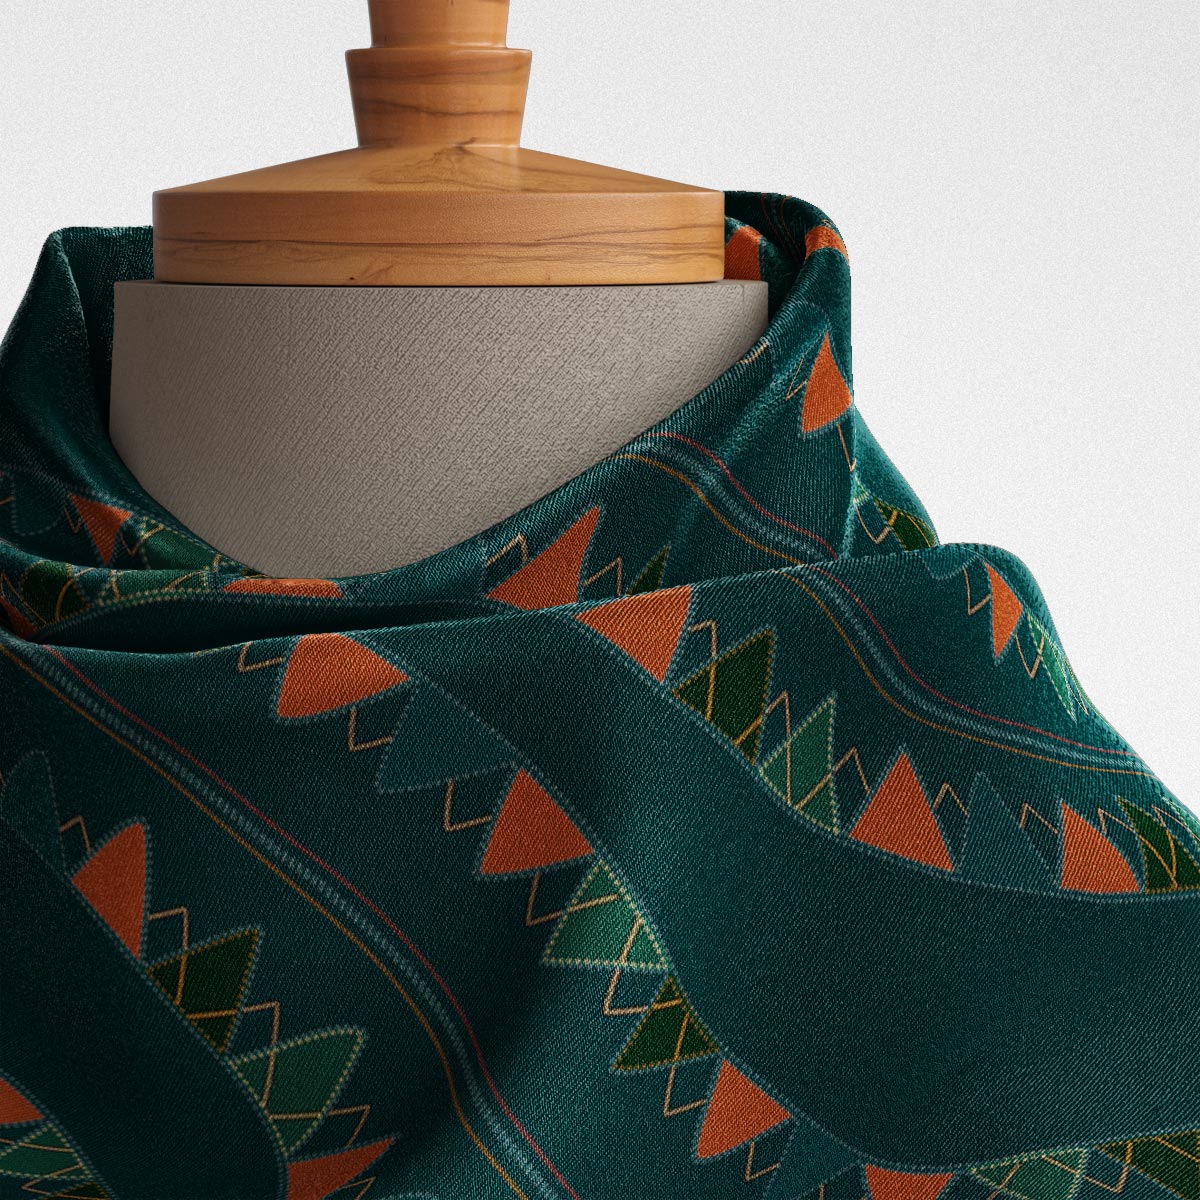 Long Dark Green Snake Scarf – 100% silk scarf